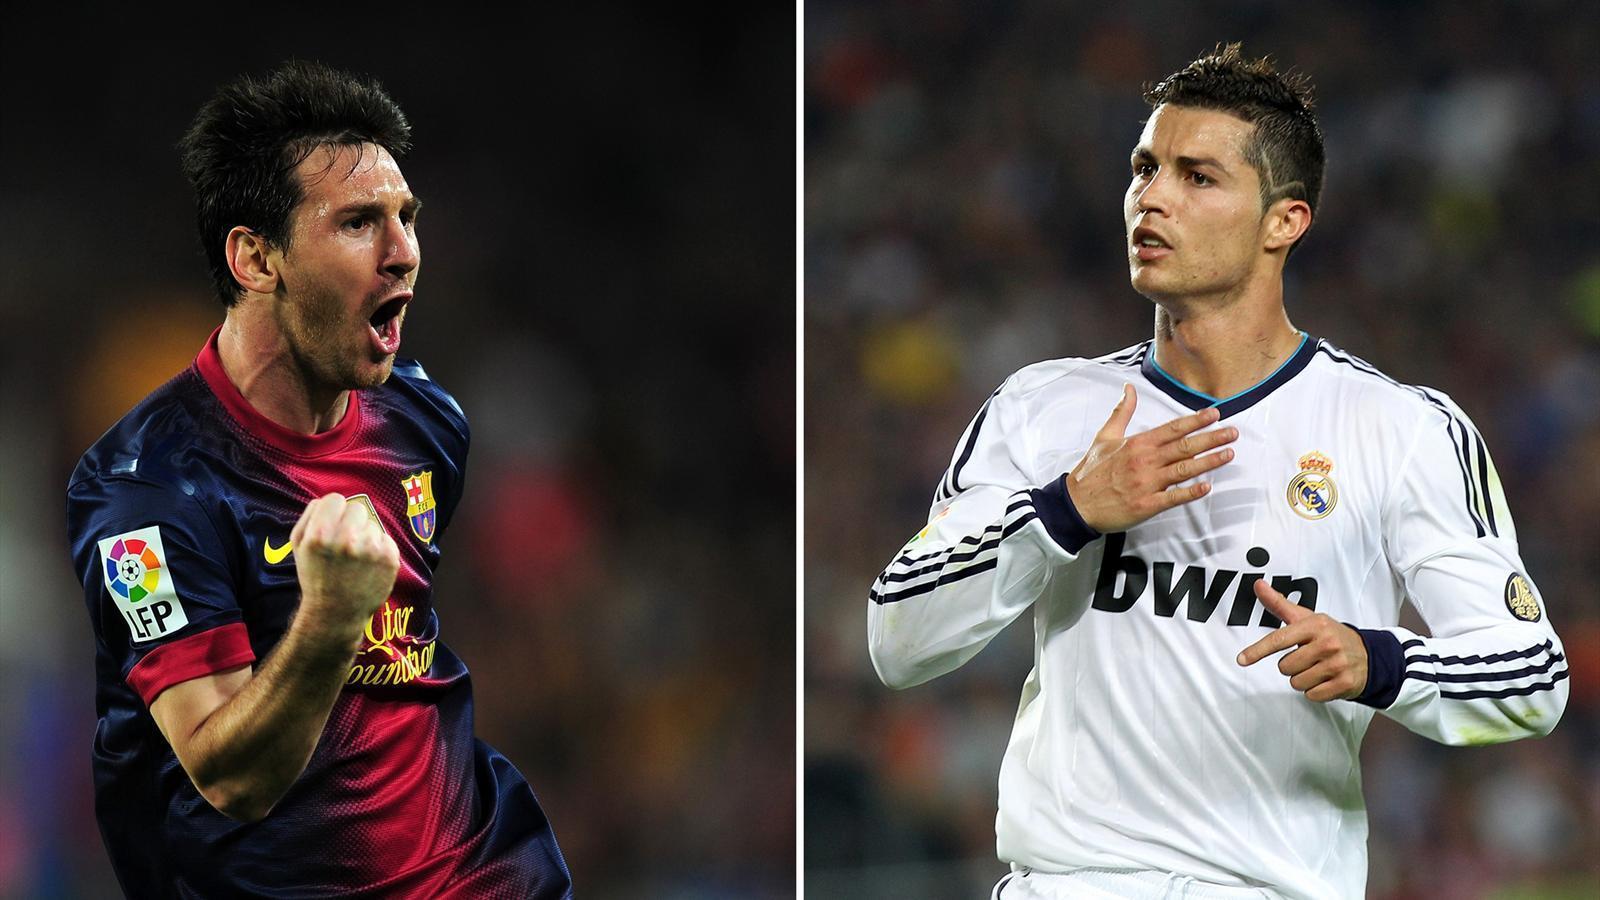 Messi should beat Ronaldo to Ballon d&;Or 2014